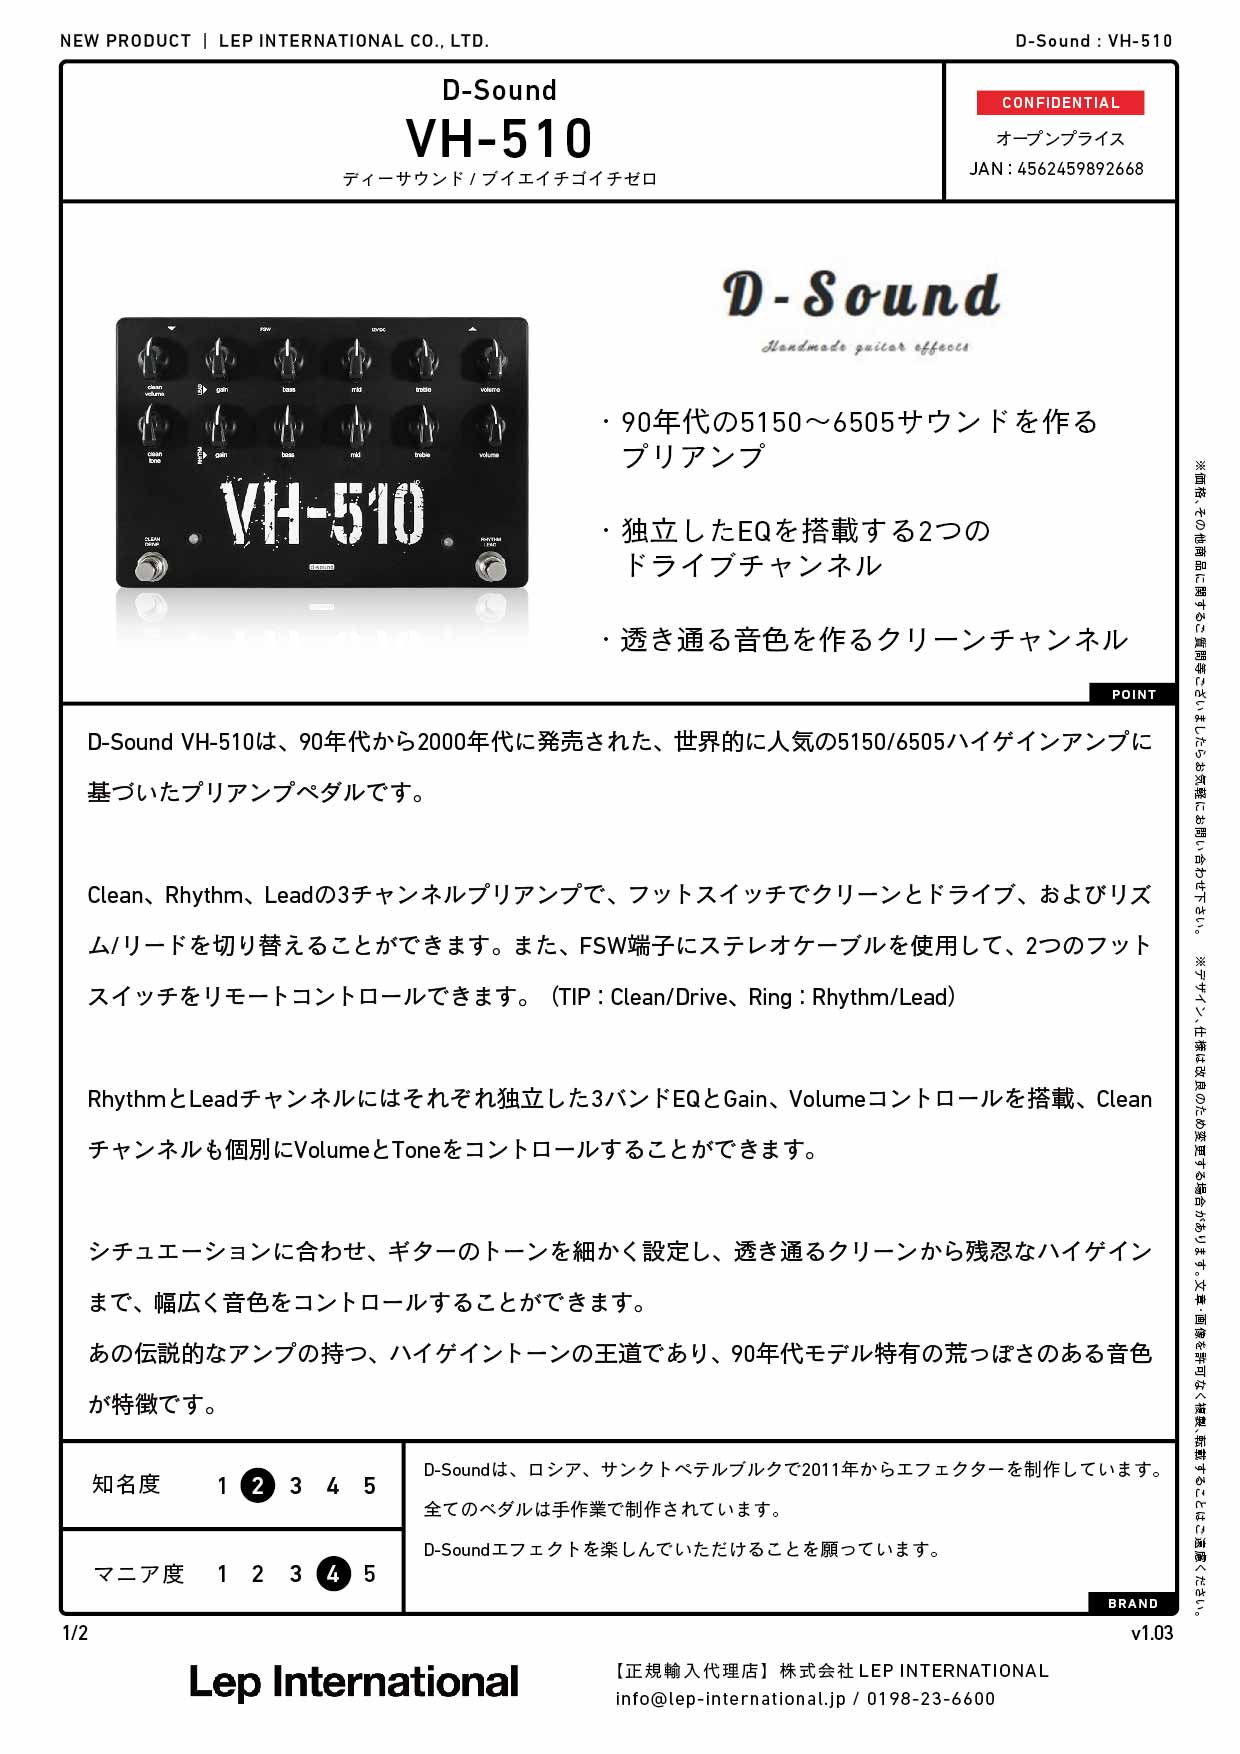 D-Sound/VH-510